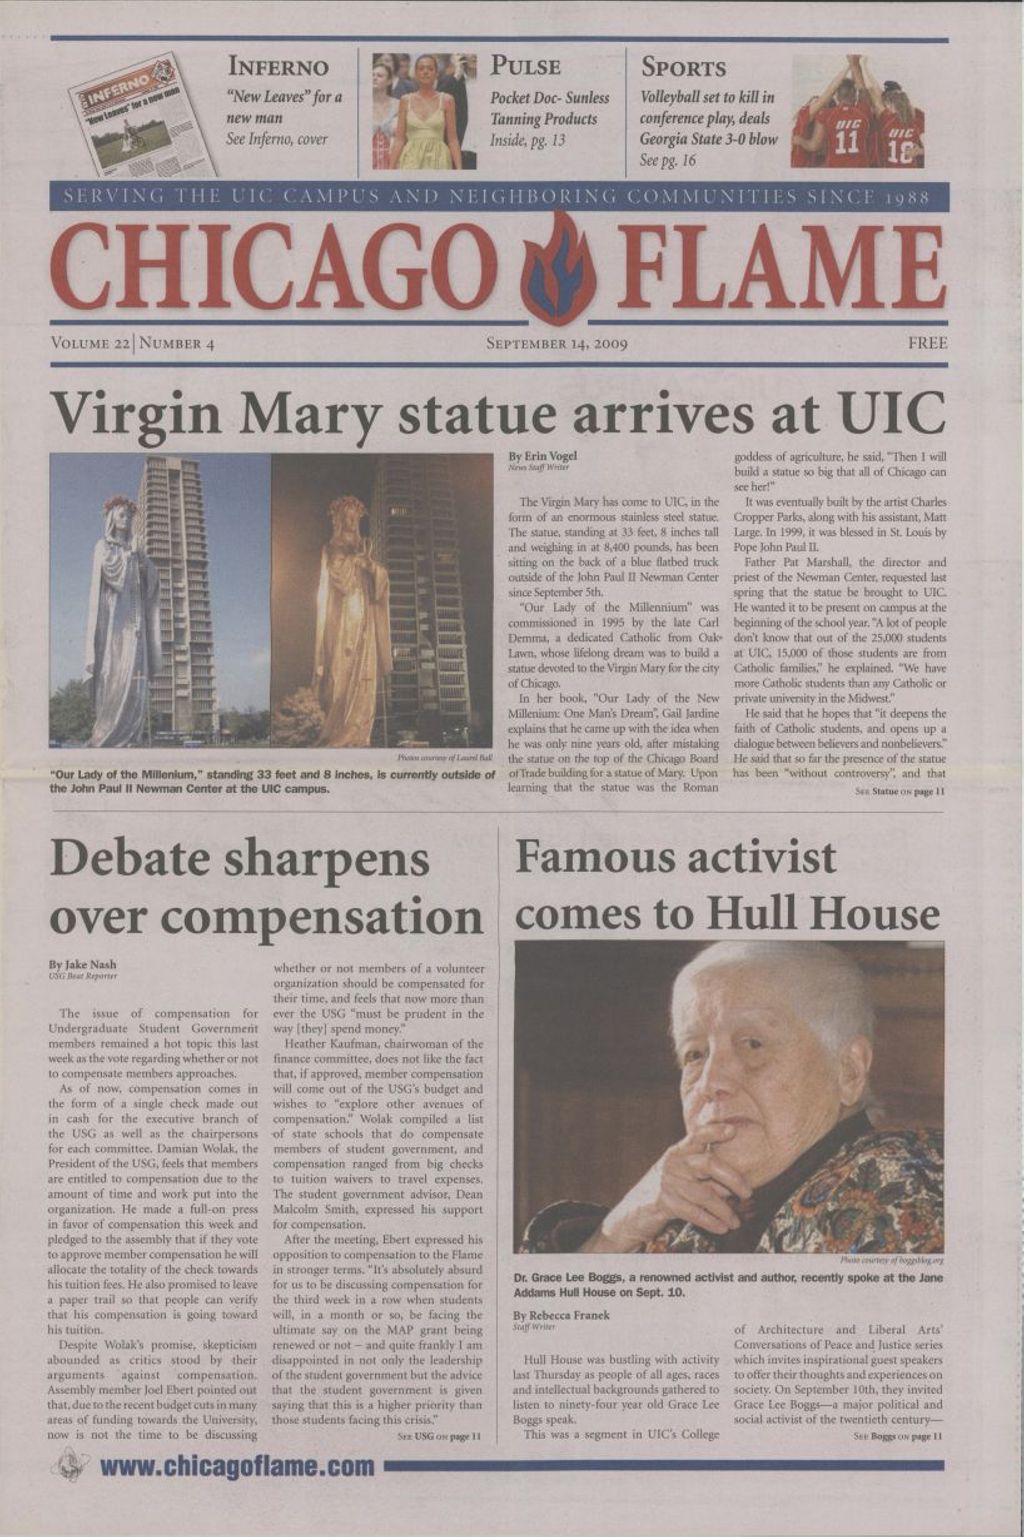 Chicago Flame (September 14, 2009)